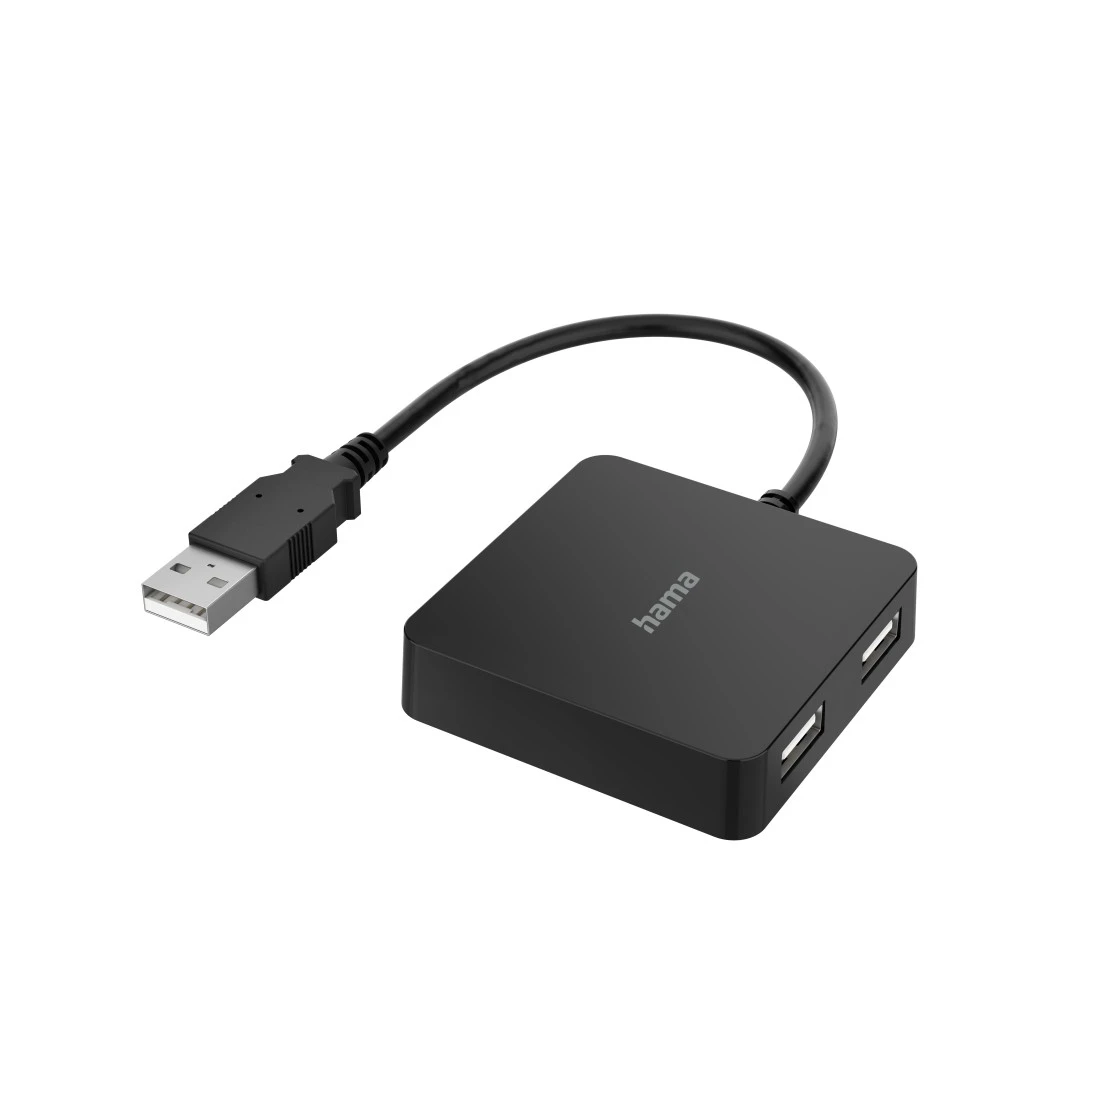 Concentrador USB, 4 puertos, USB 2.0, 480 Mbit/s | Hama